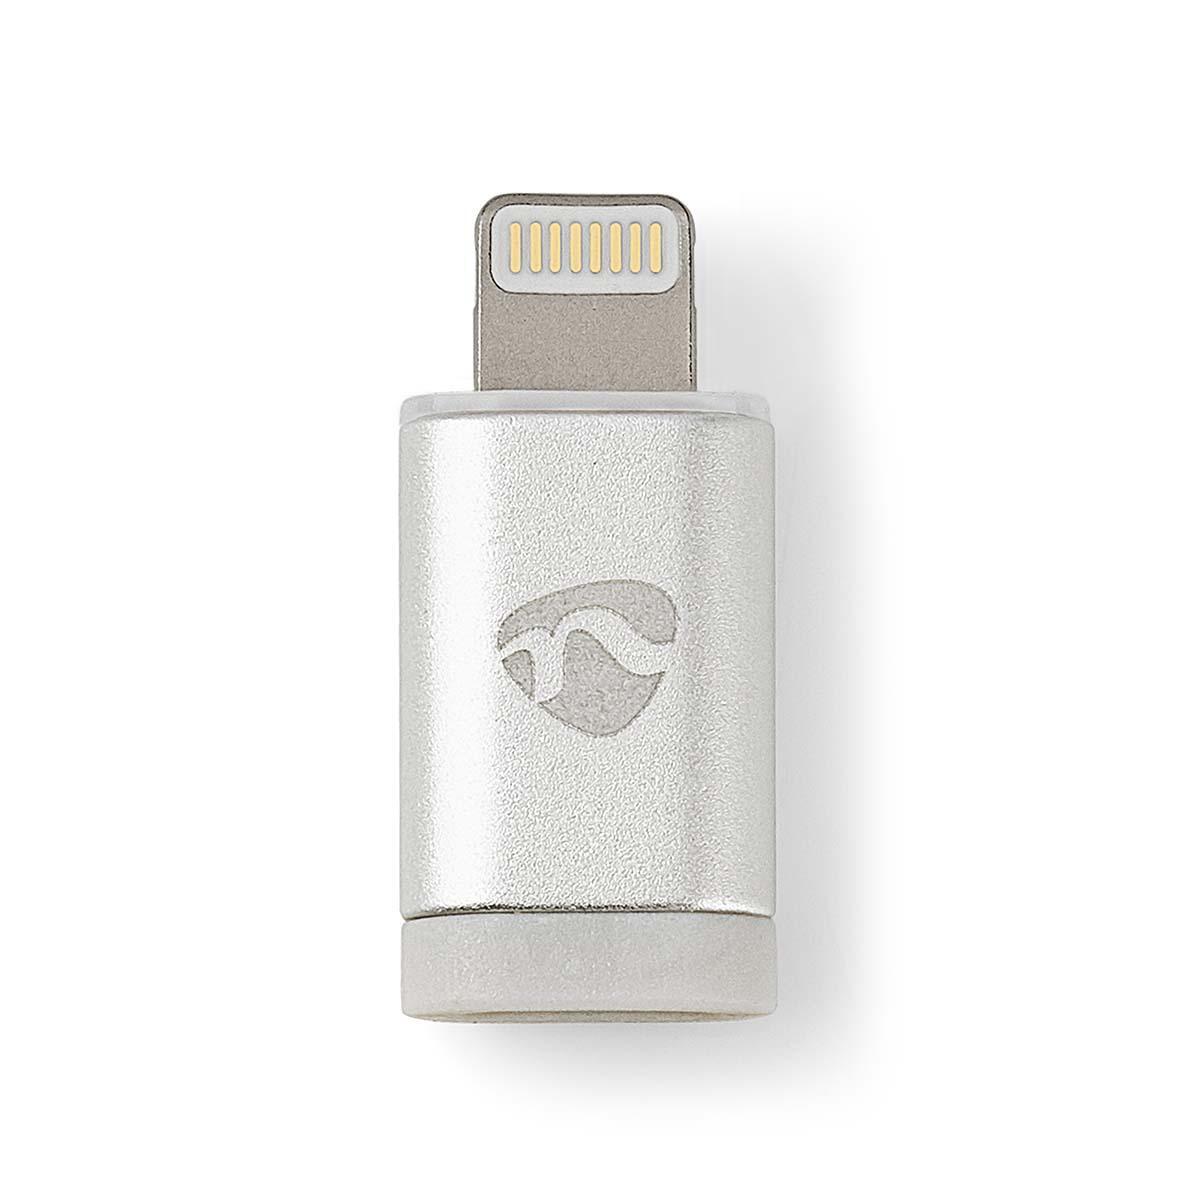 Nedis - Nedis Adaptateur de Synchronisation et de Charge Lightning Mâle 8 Broches vers USB 2.0 Micro-B Femelle - Câble Lightning